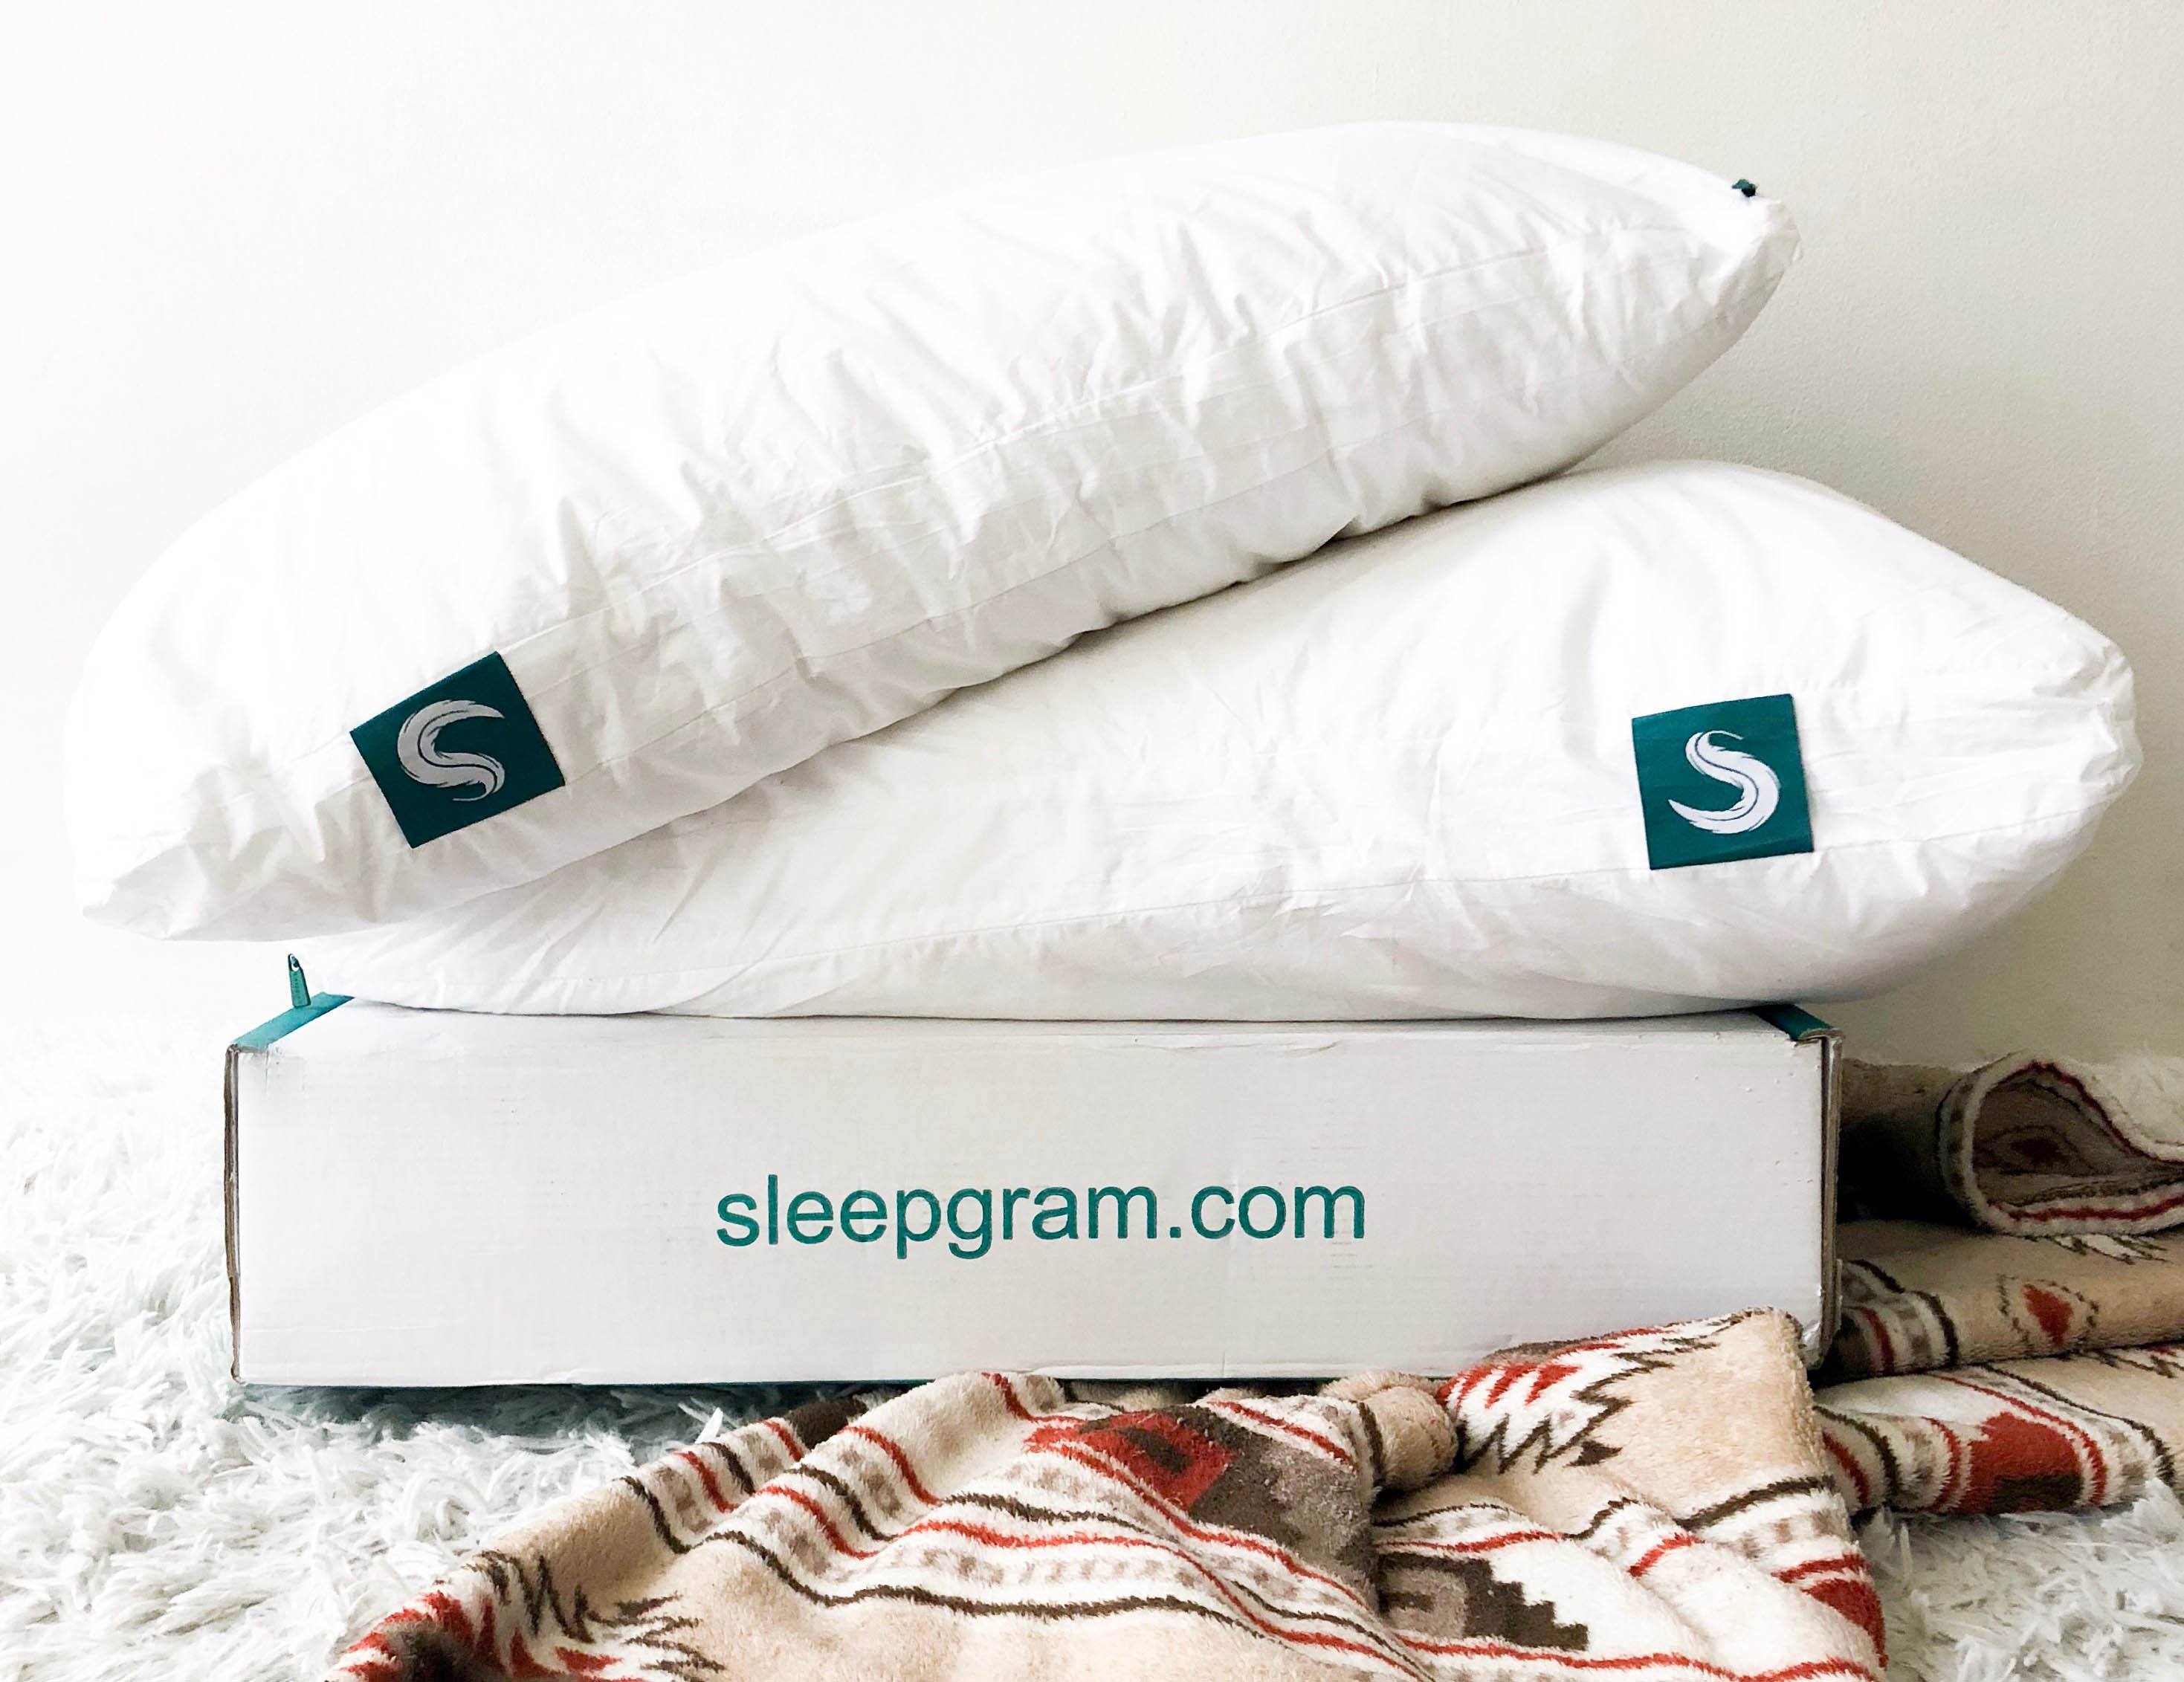 silky1 – Sleepgram